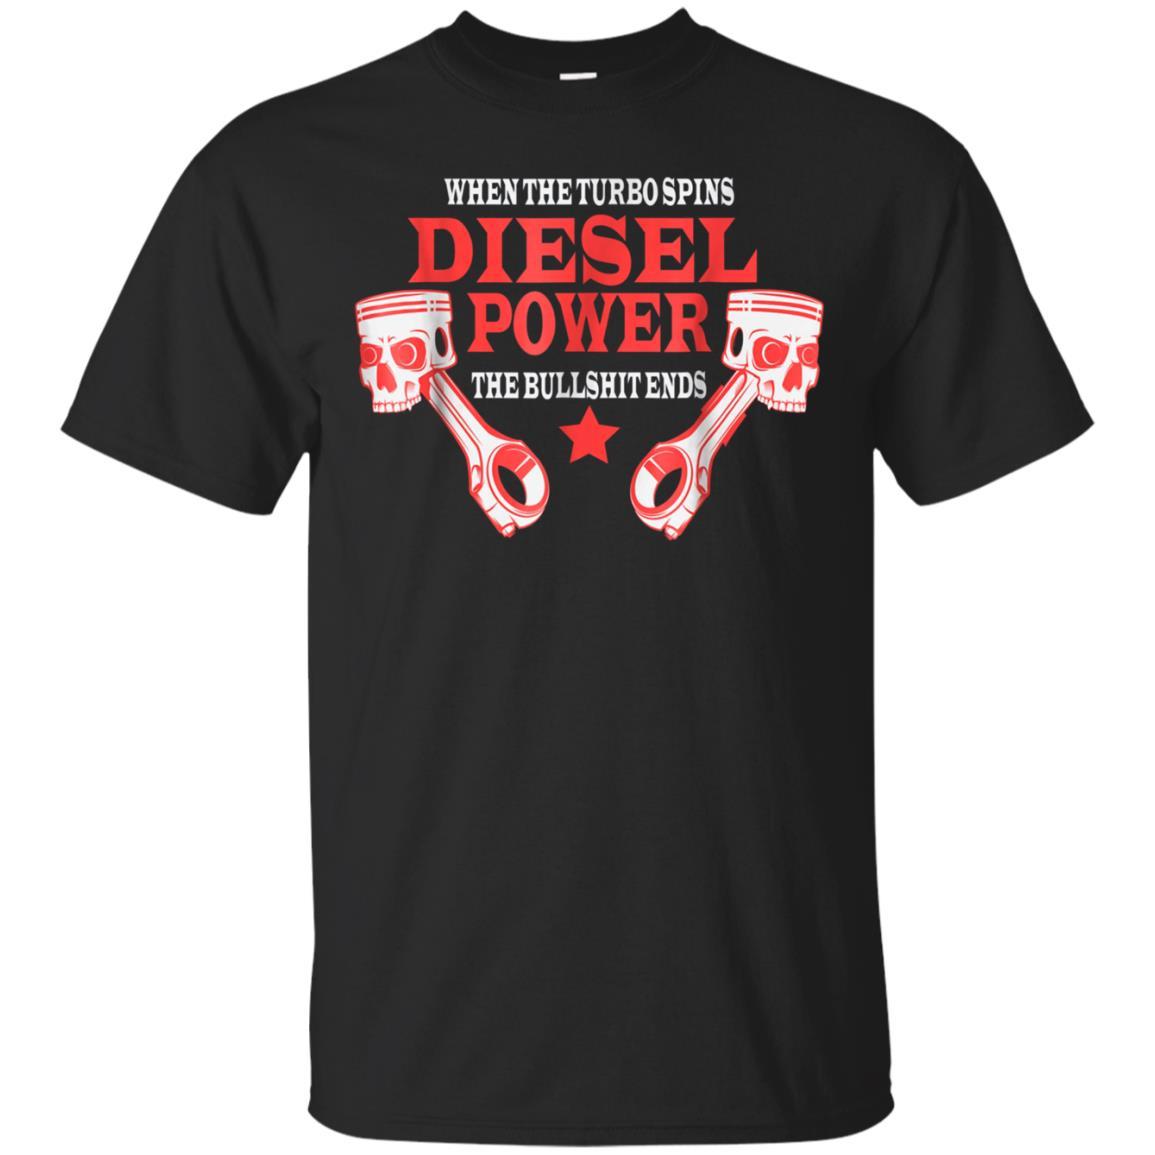 Diesel Power T-shirt Truck Turbo Brothers Mechanic